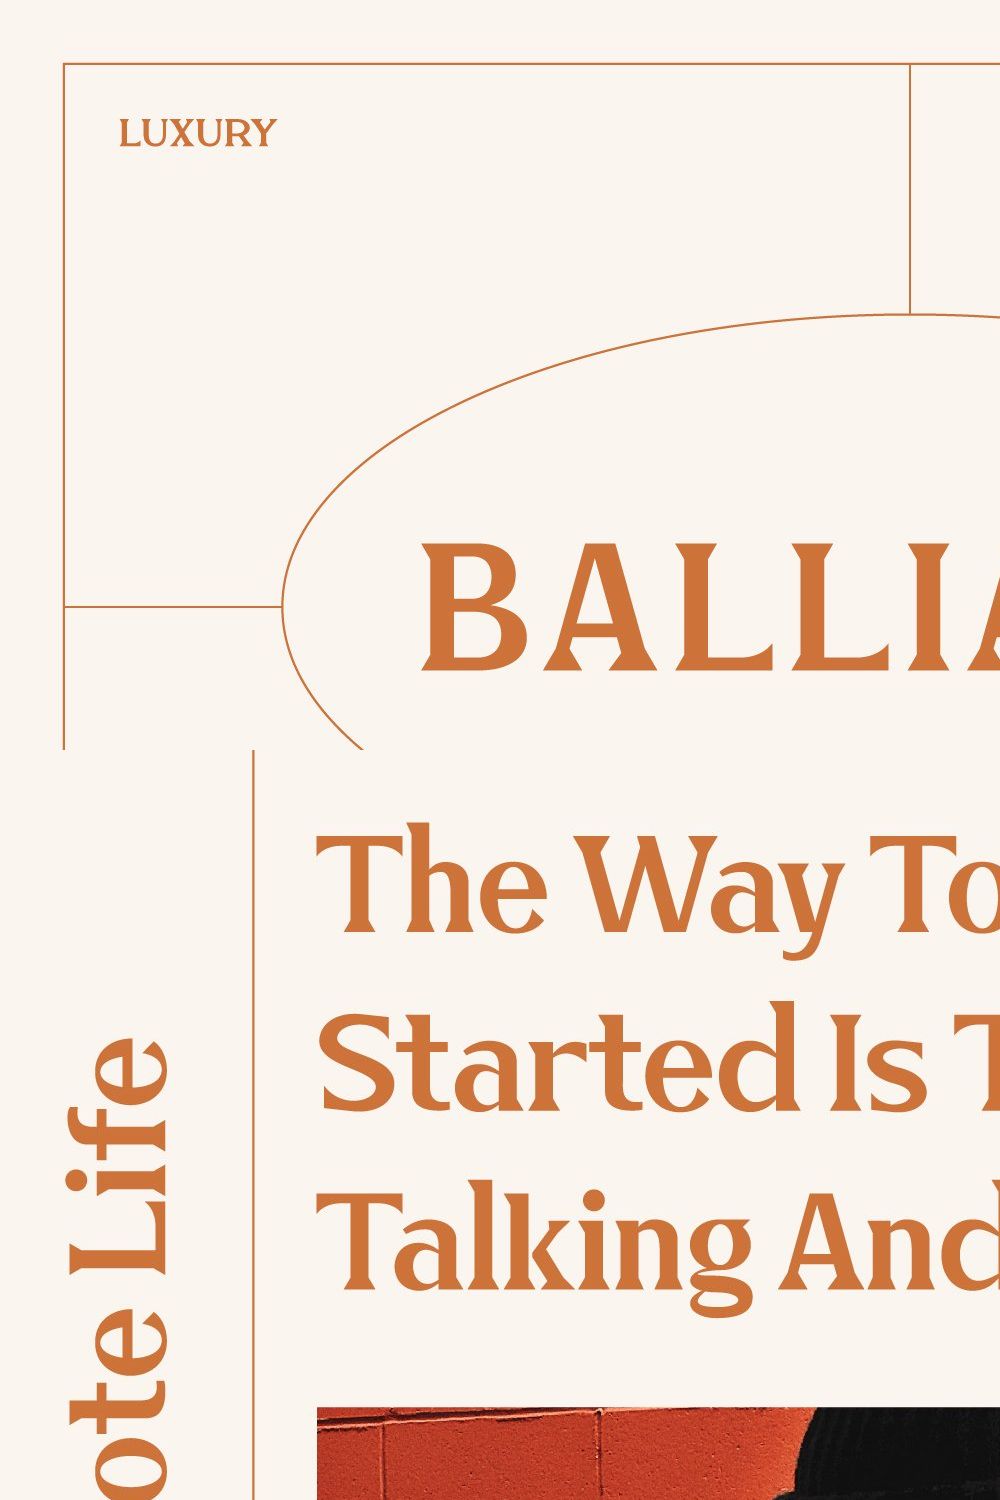 Balliadis Serif Font pinterest preview image.